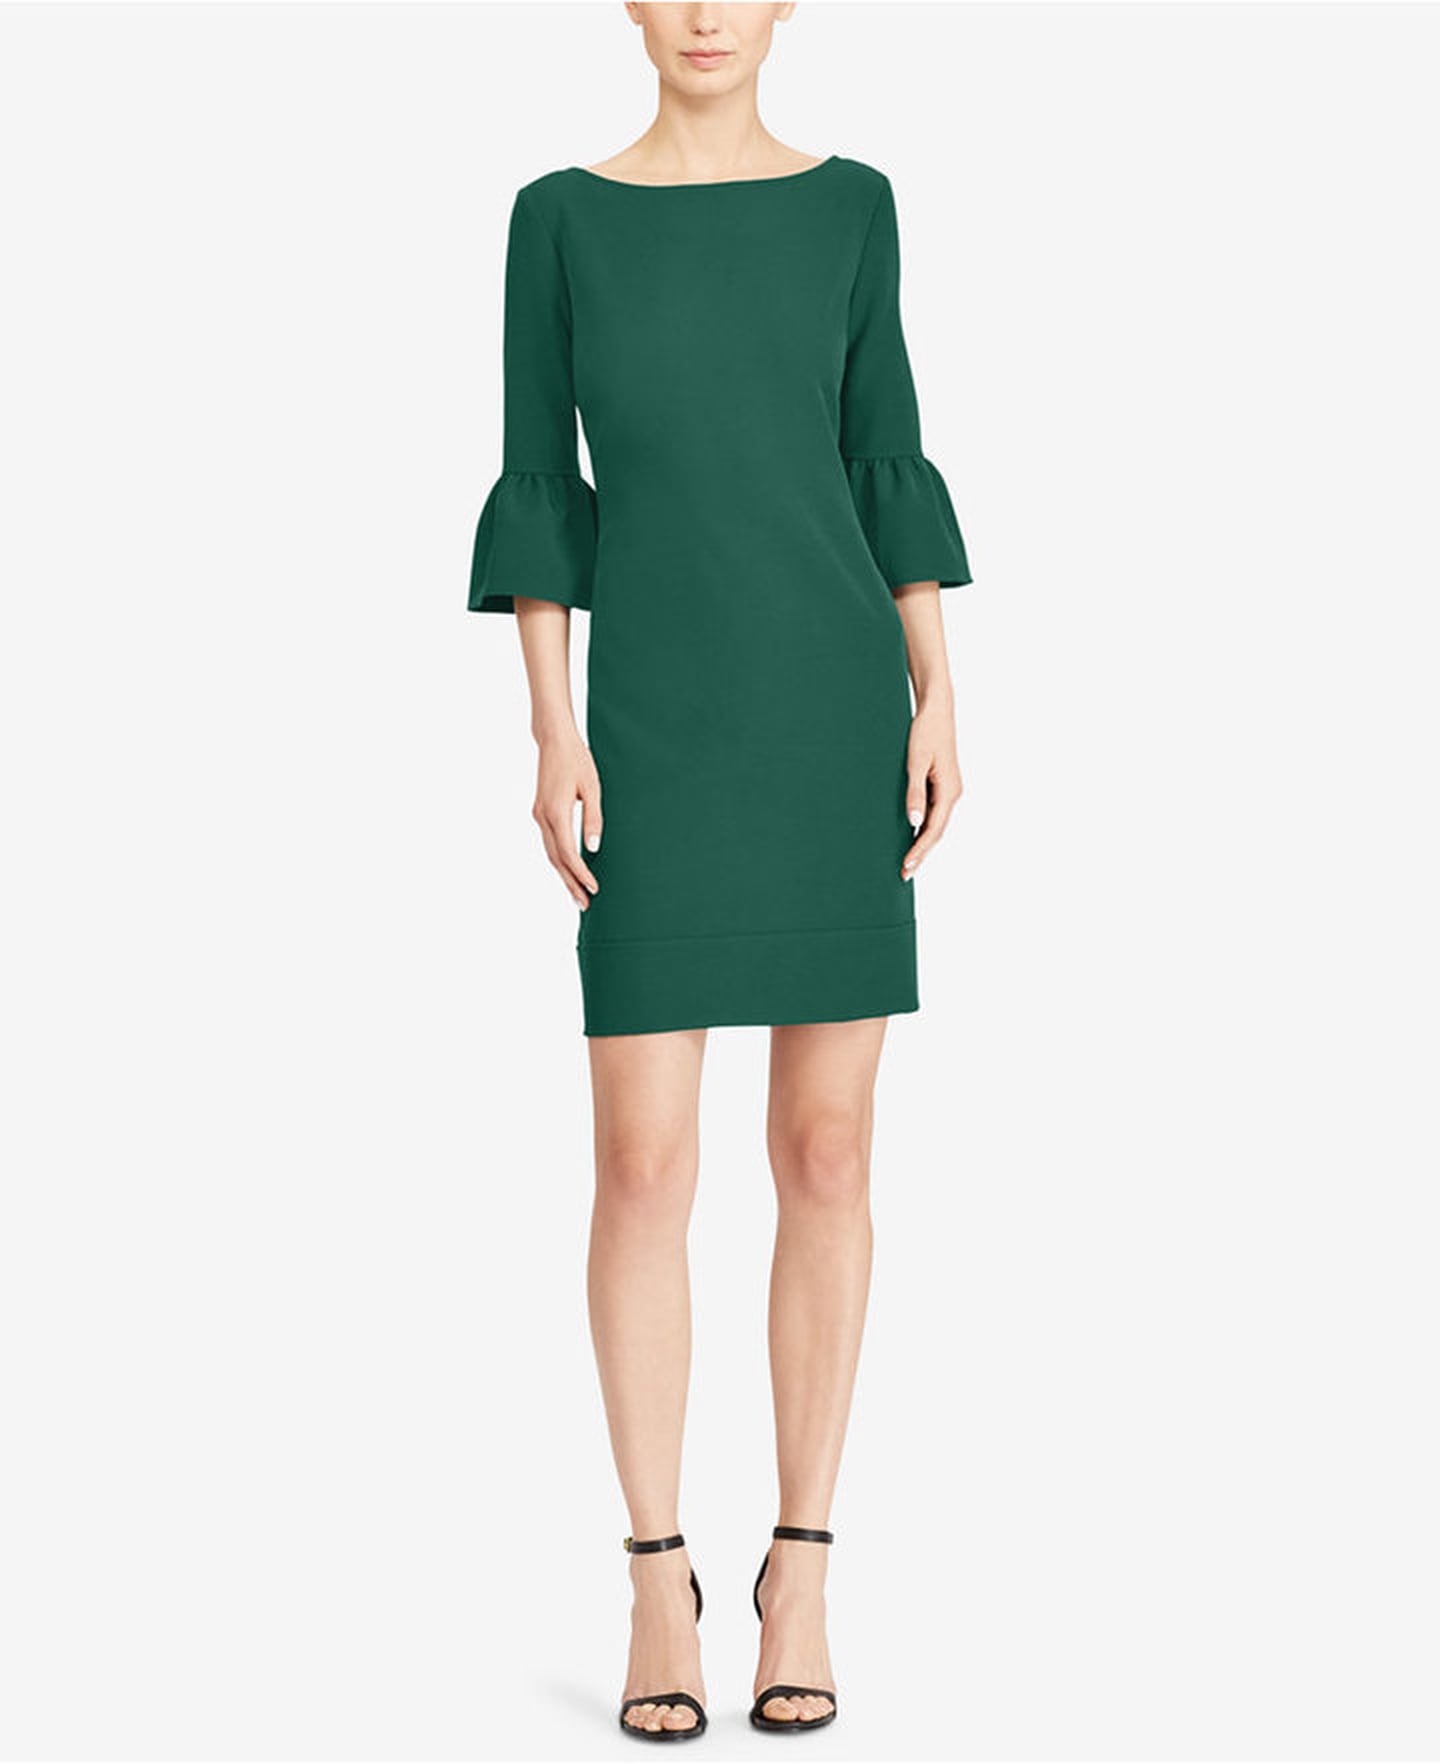 Meghan Markle's Green Dress For Engagement Interview | POPSUGAR Fashion